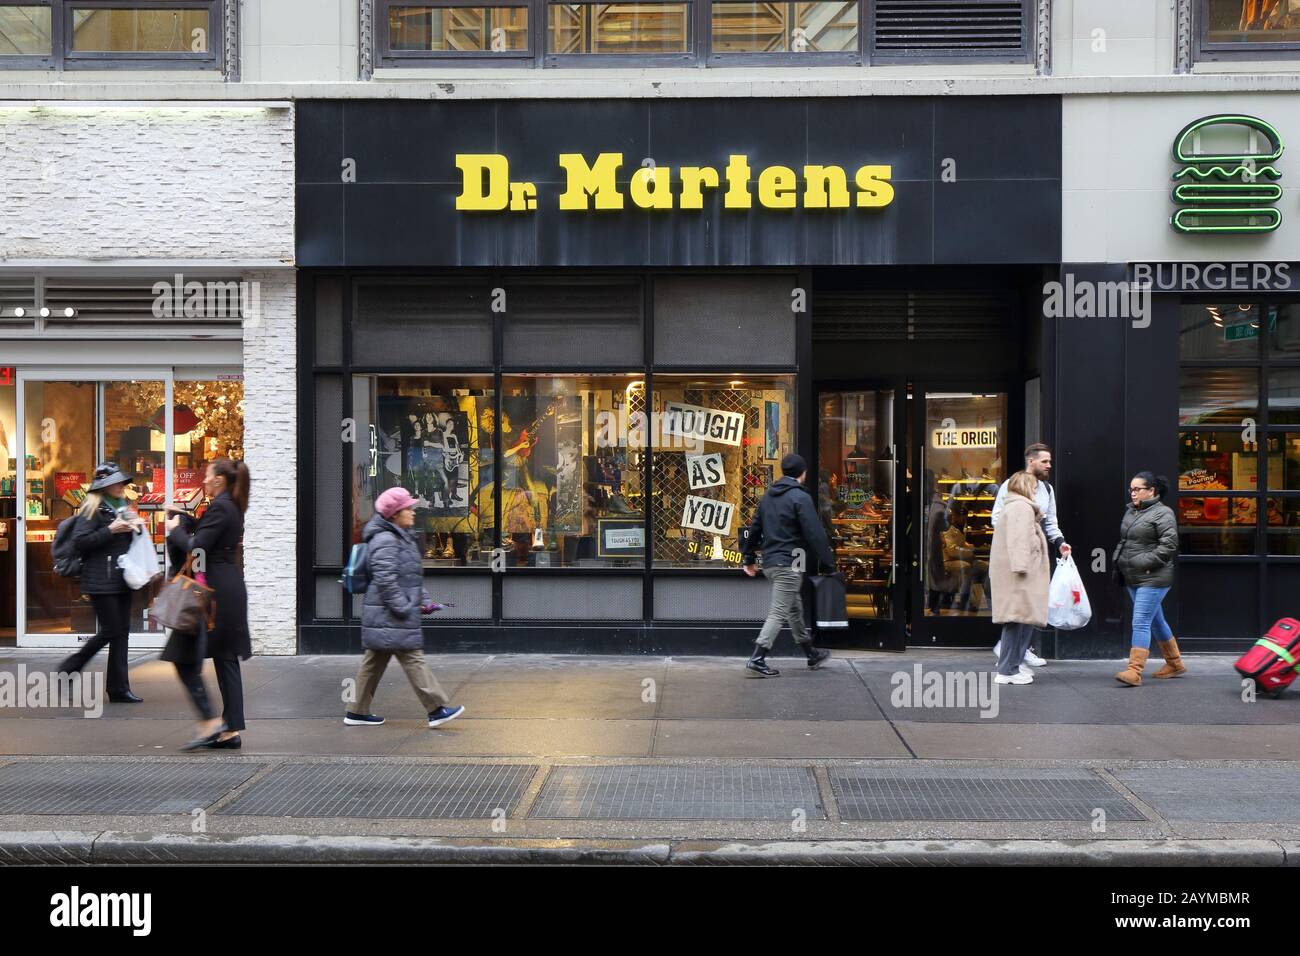 A Dr. Martens Schuh-Shop in New York Stockfotografie - Alamy